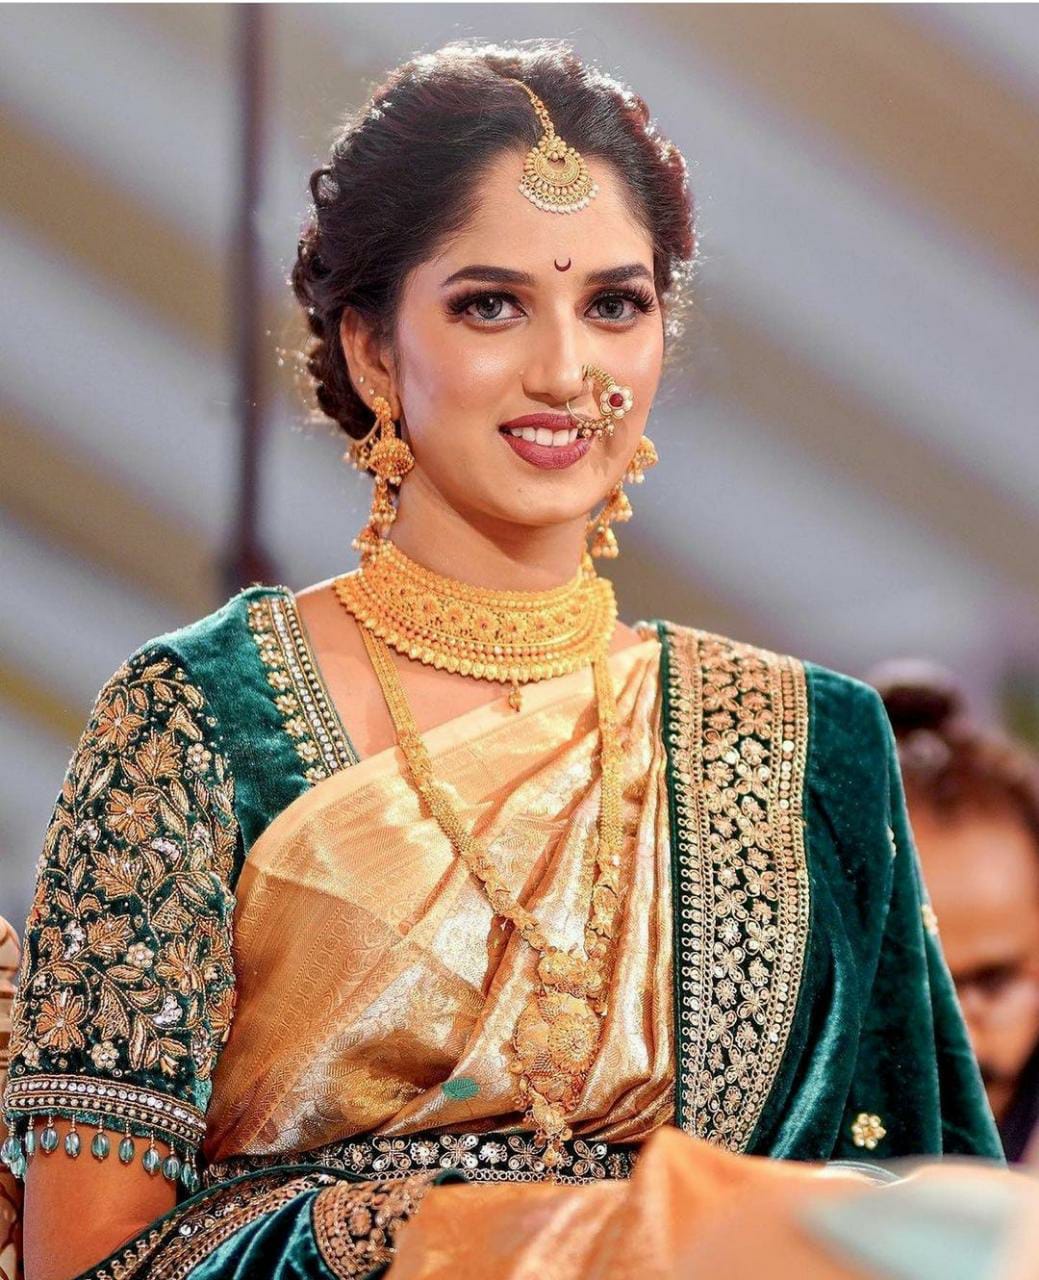 Maharashtrian Bridal Traditional Look Hair Style & Makeup - YouTube